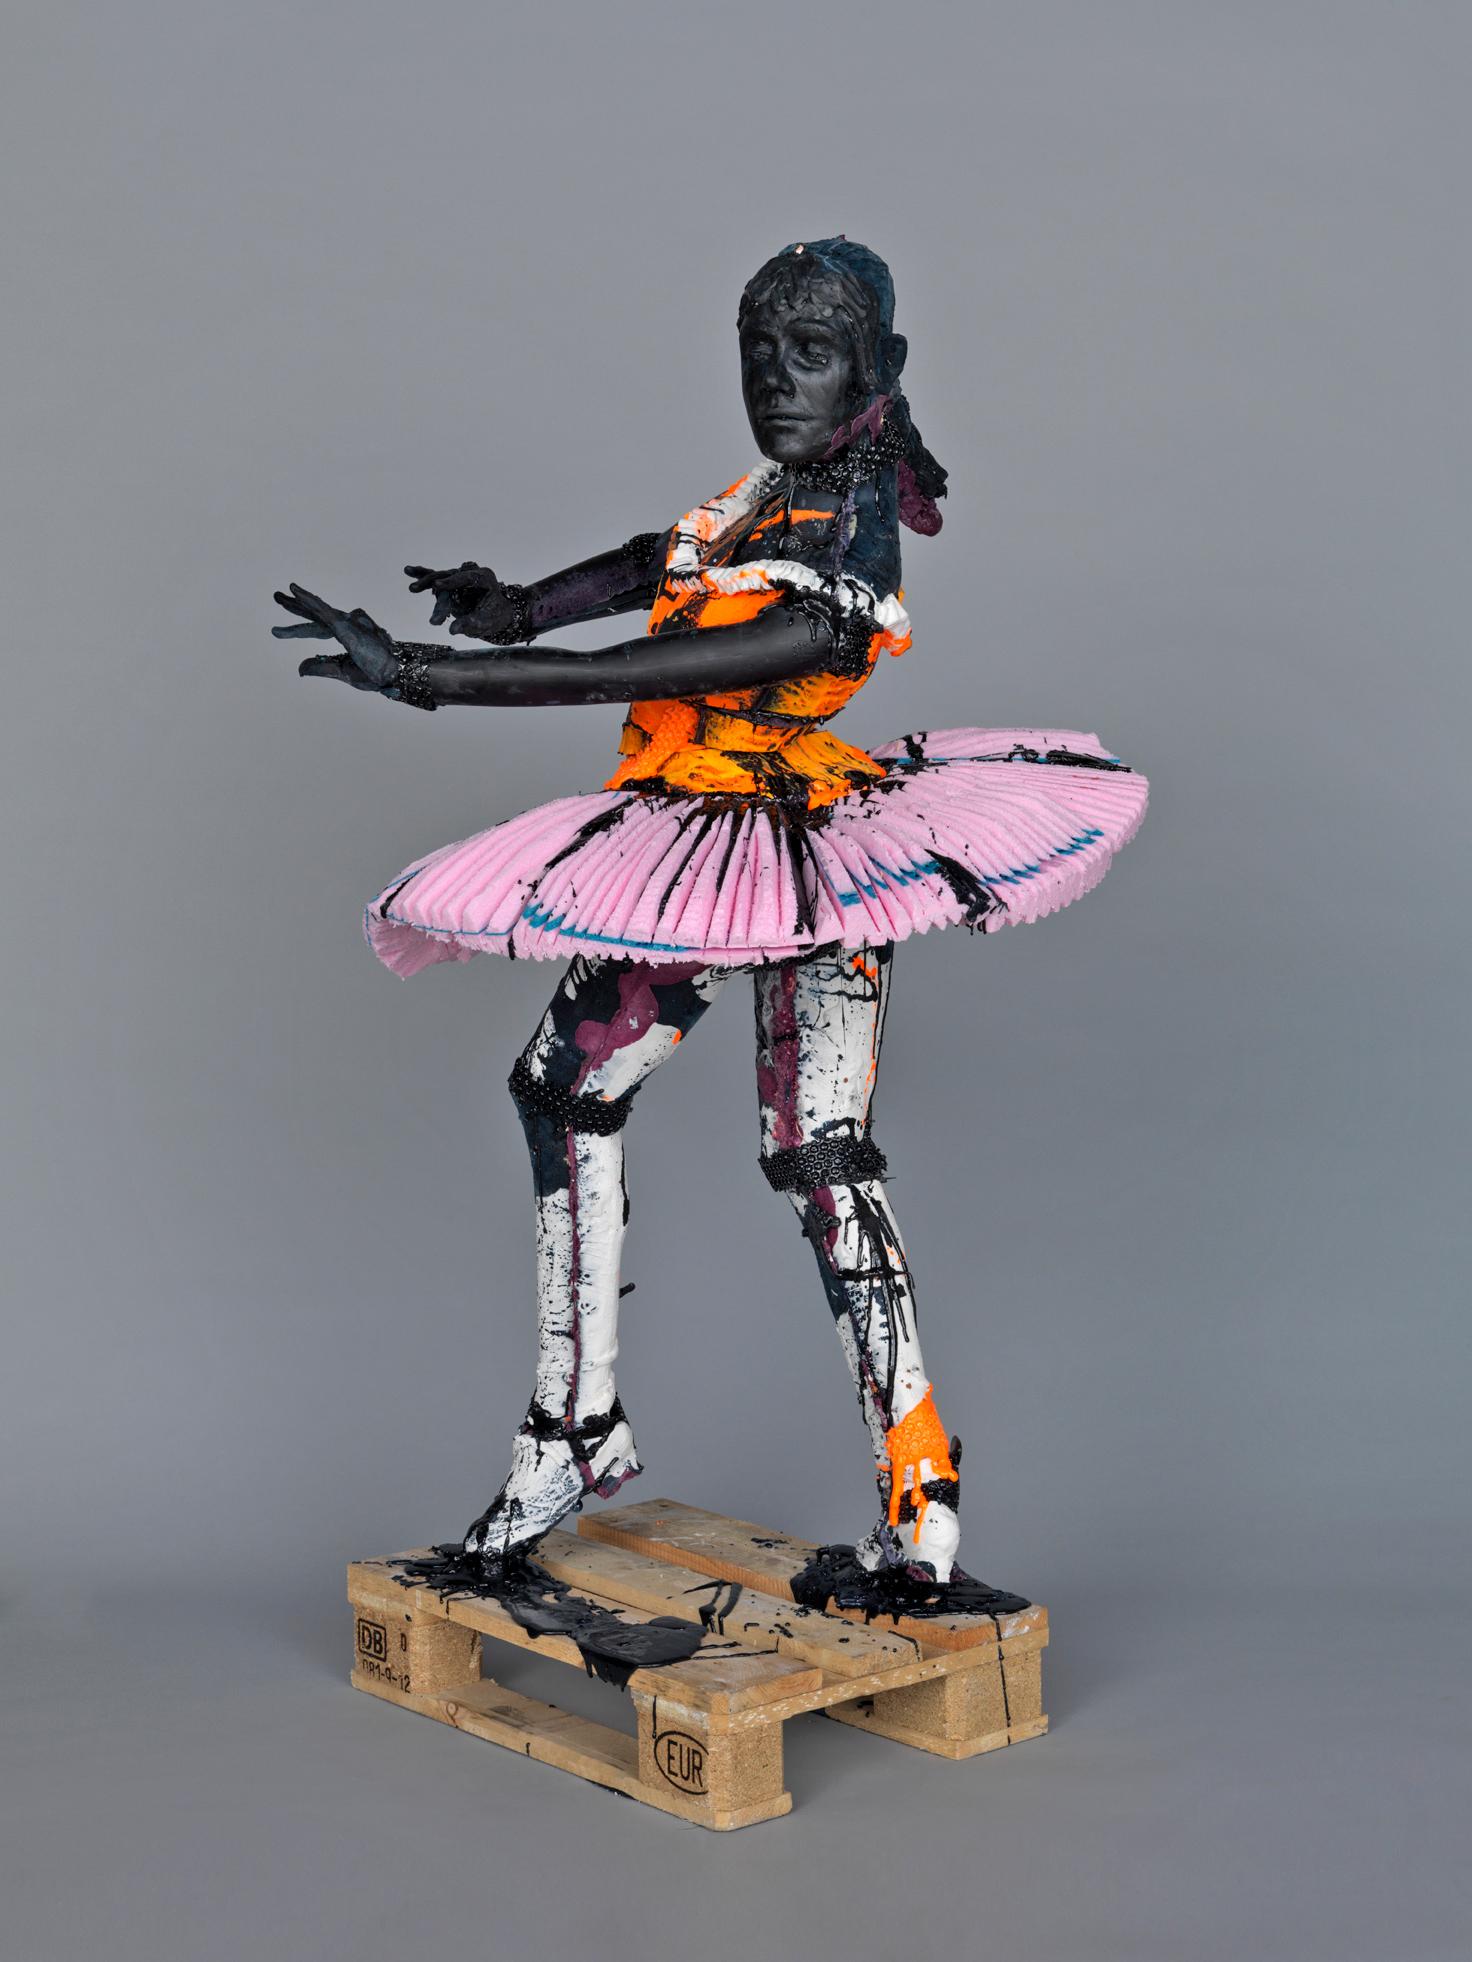 Folkert de Jong Figurative Sculpture - The Practice - Take 10, Dutch Contemporary Art